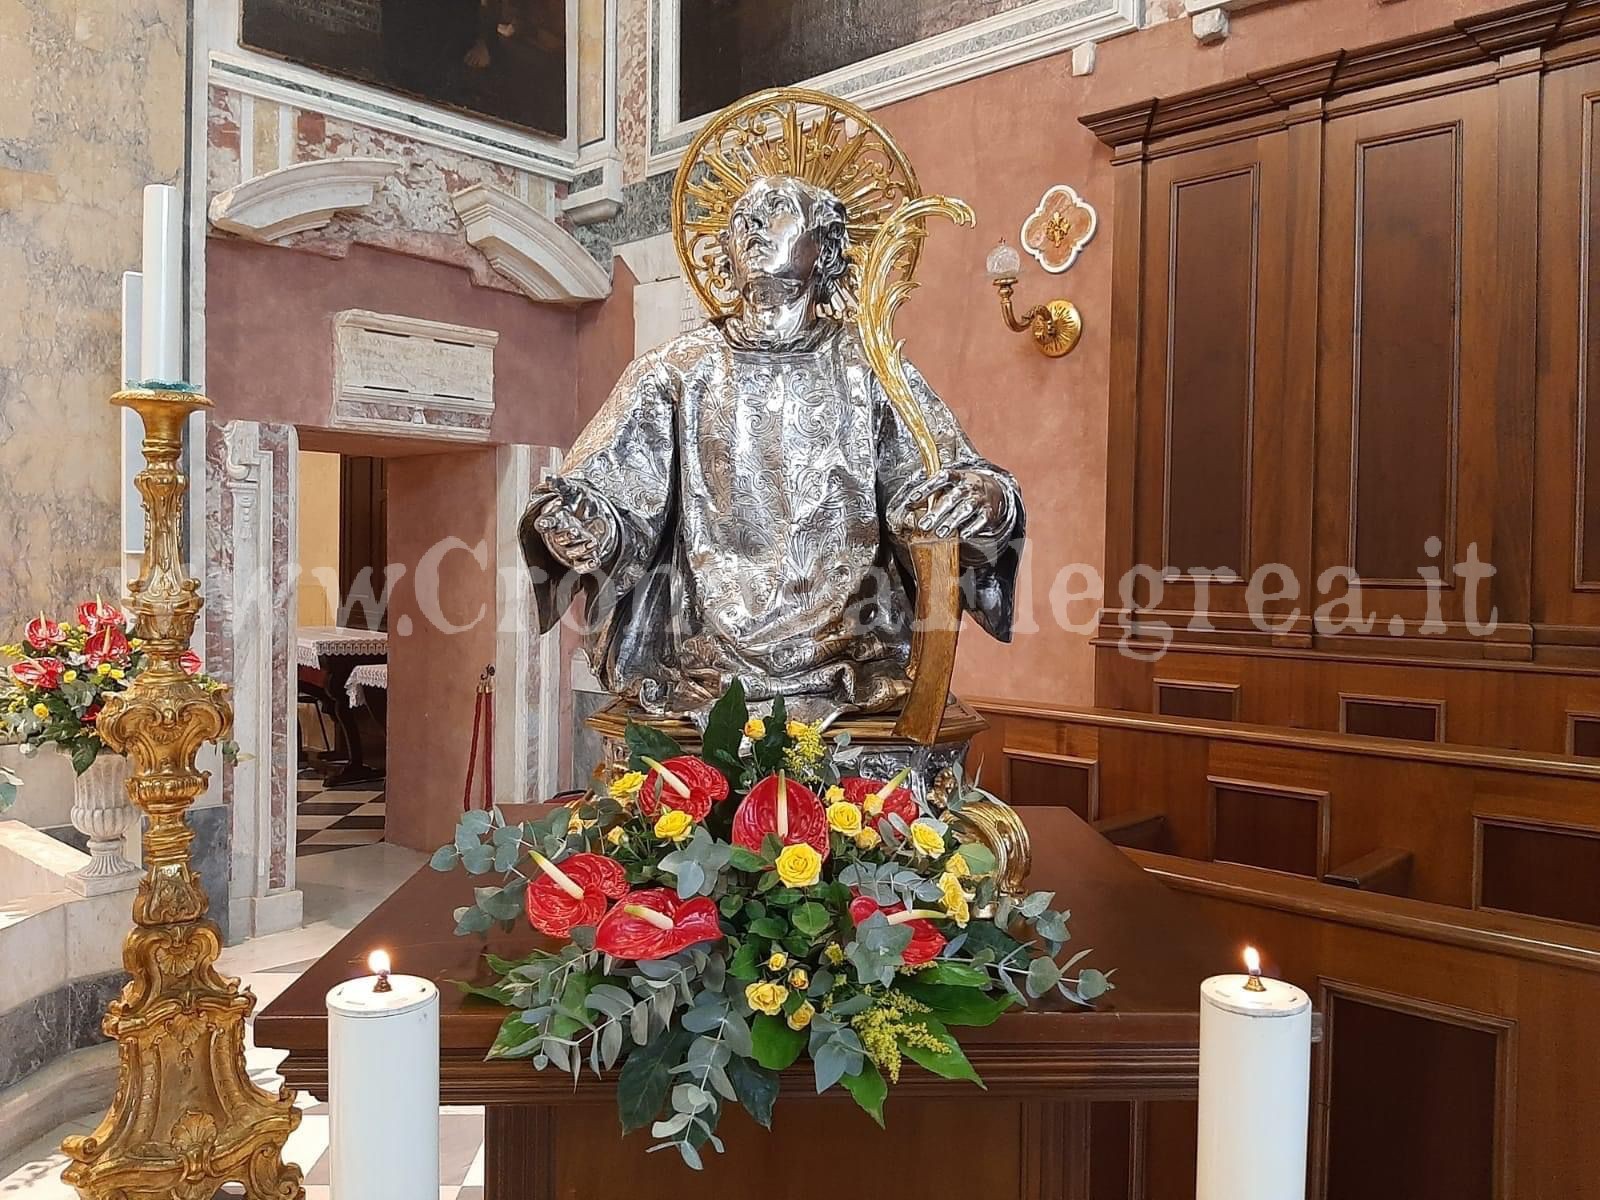 “O Divino Proculus”: Puteoli Sacra celebra il santo patrono tra arte e musica